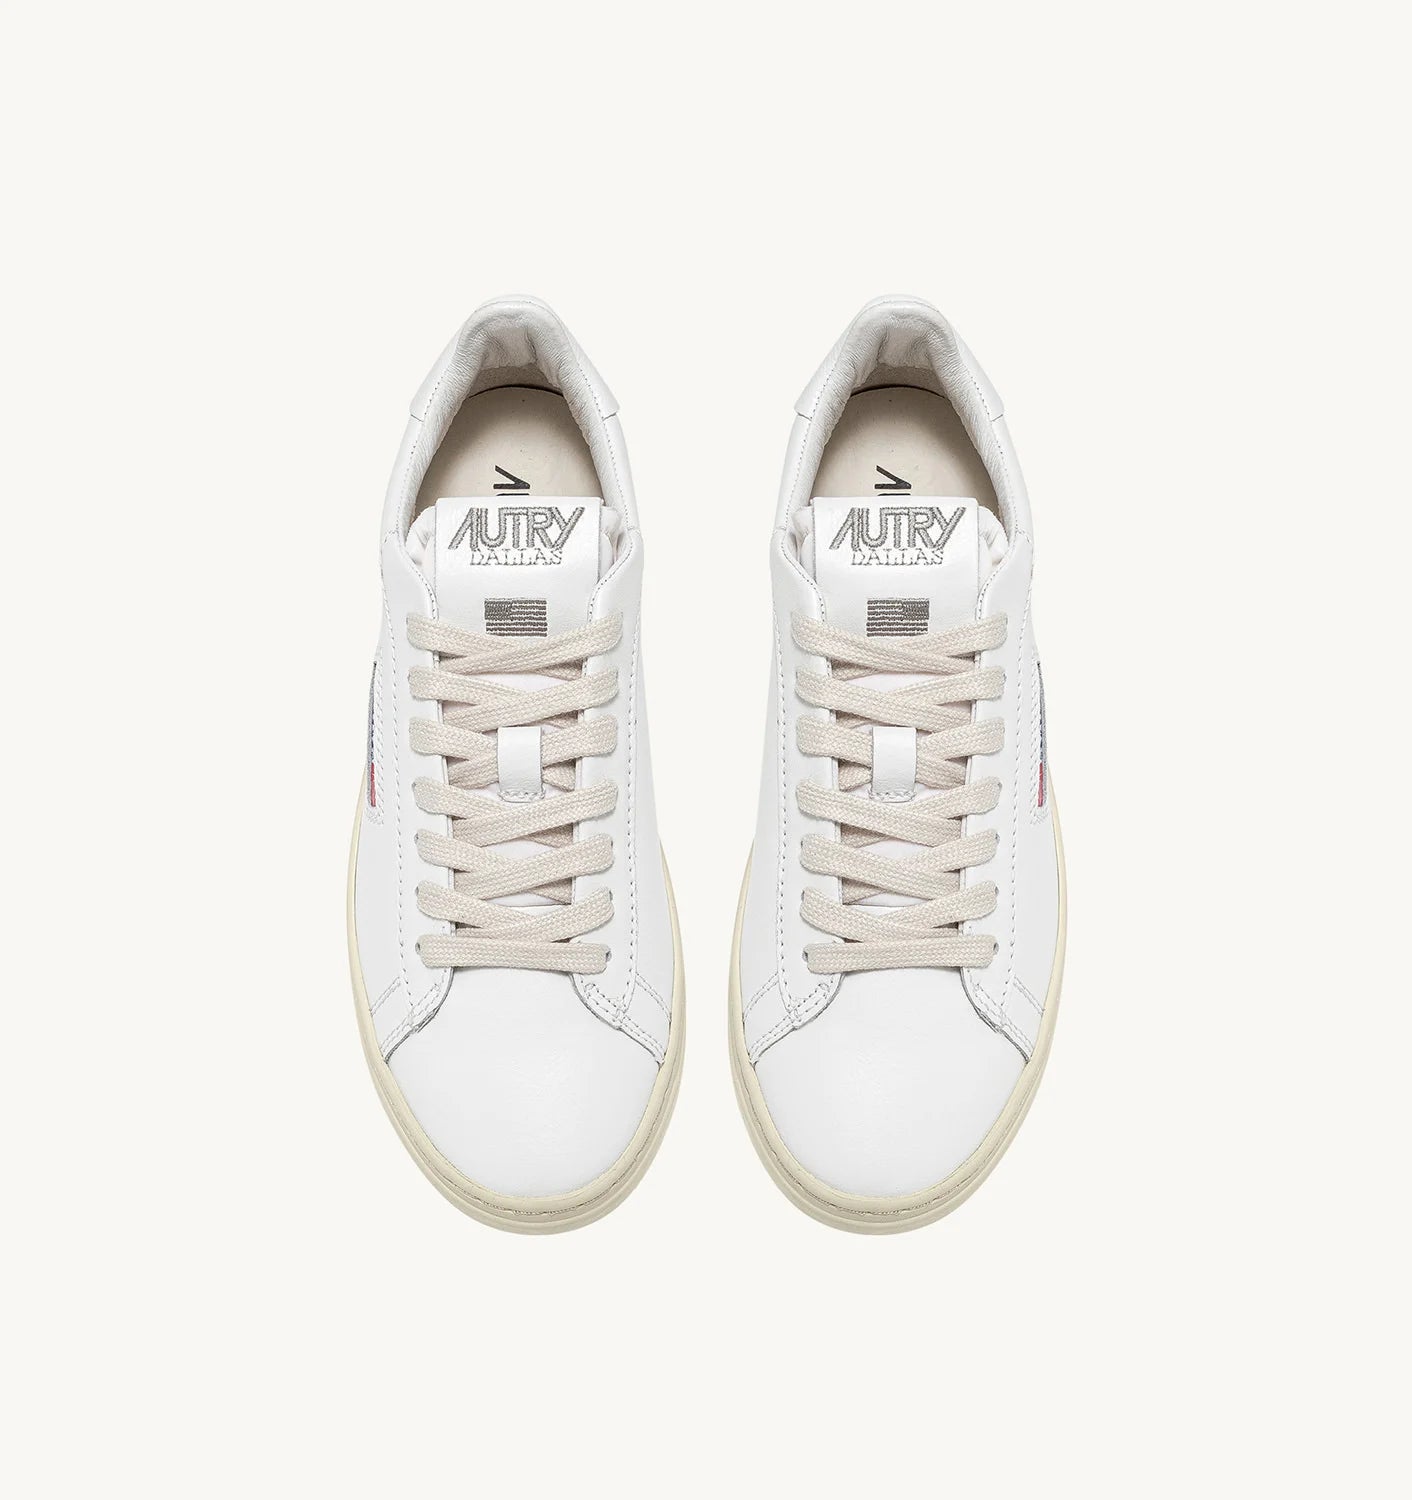 Autry NW01 Dallas White sneakers